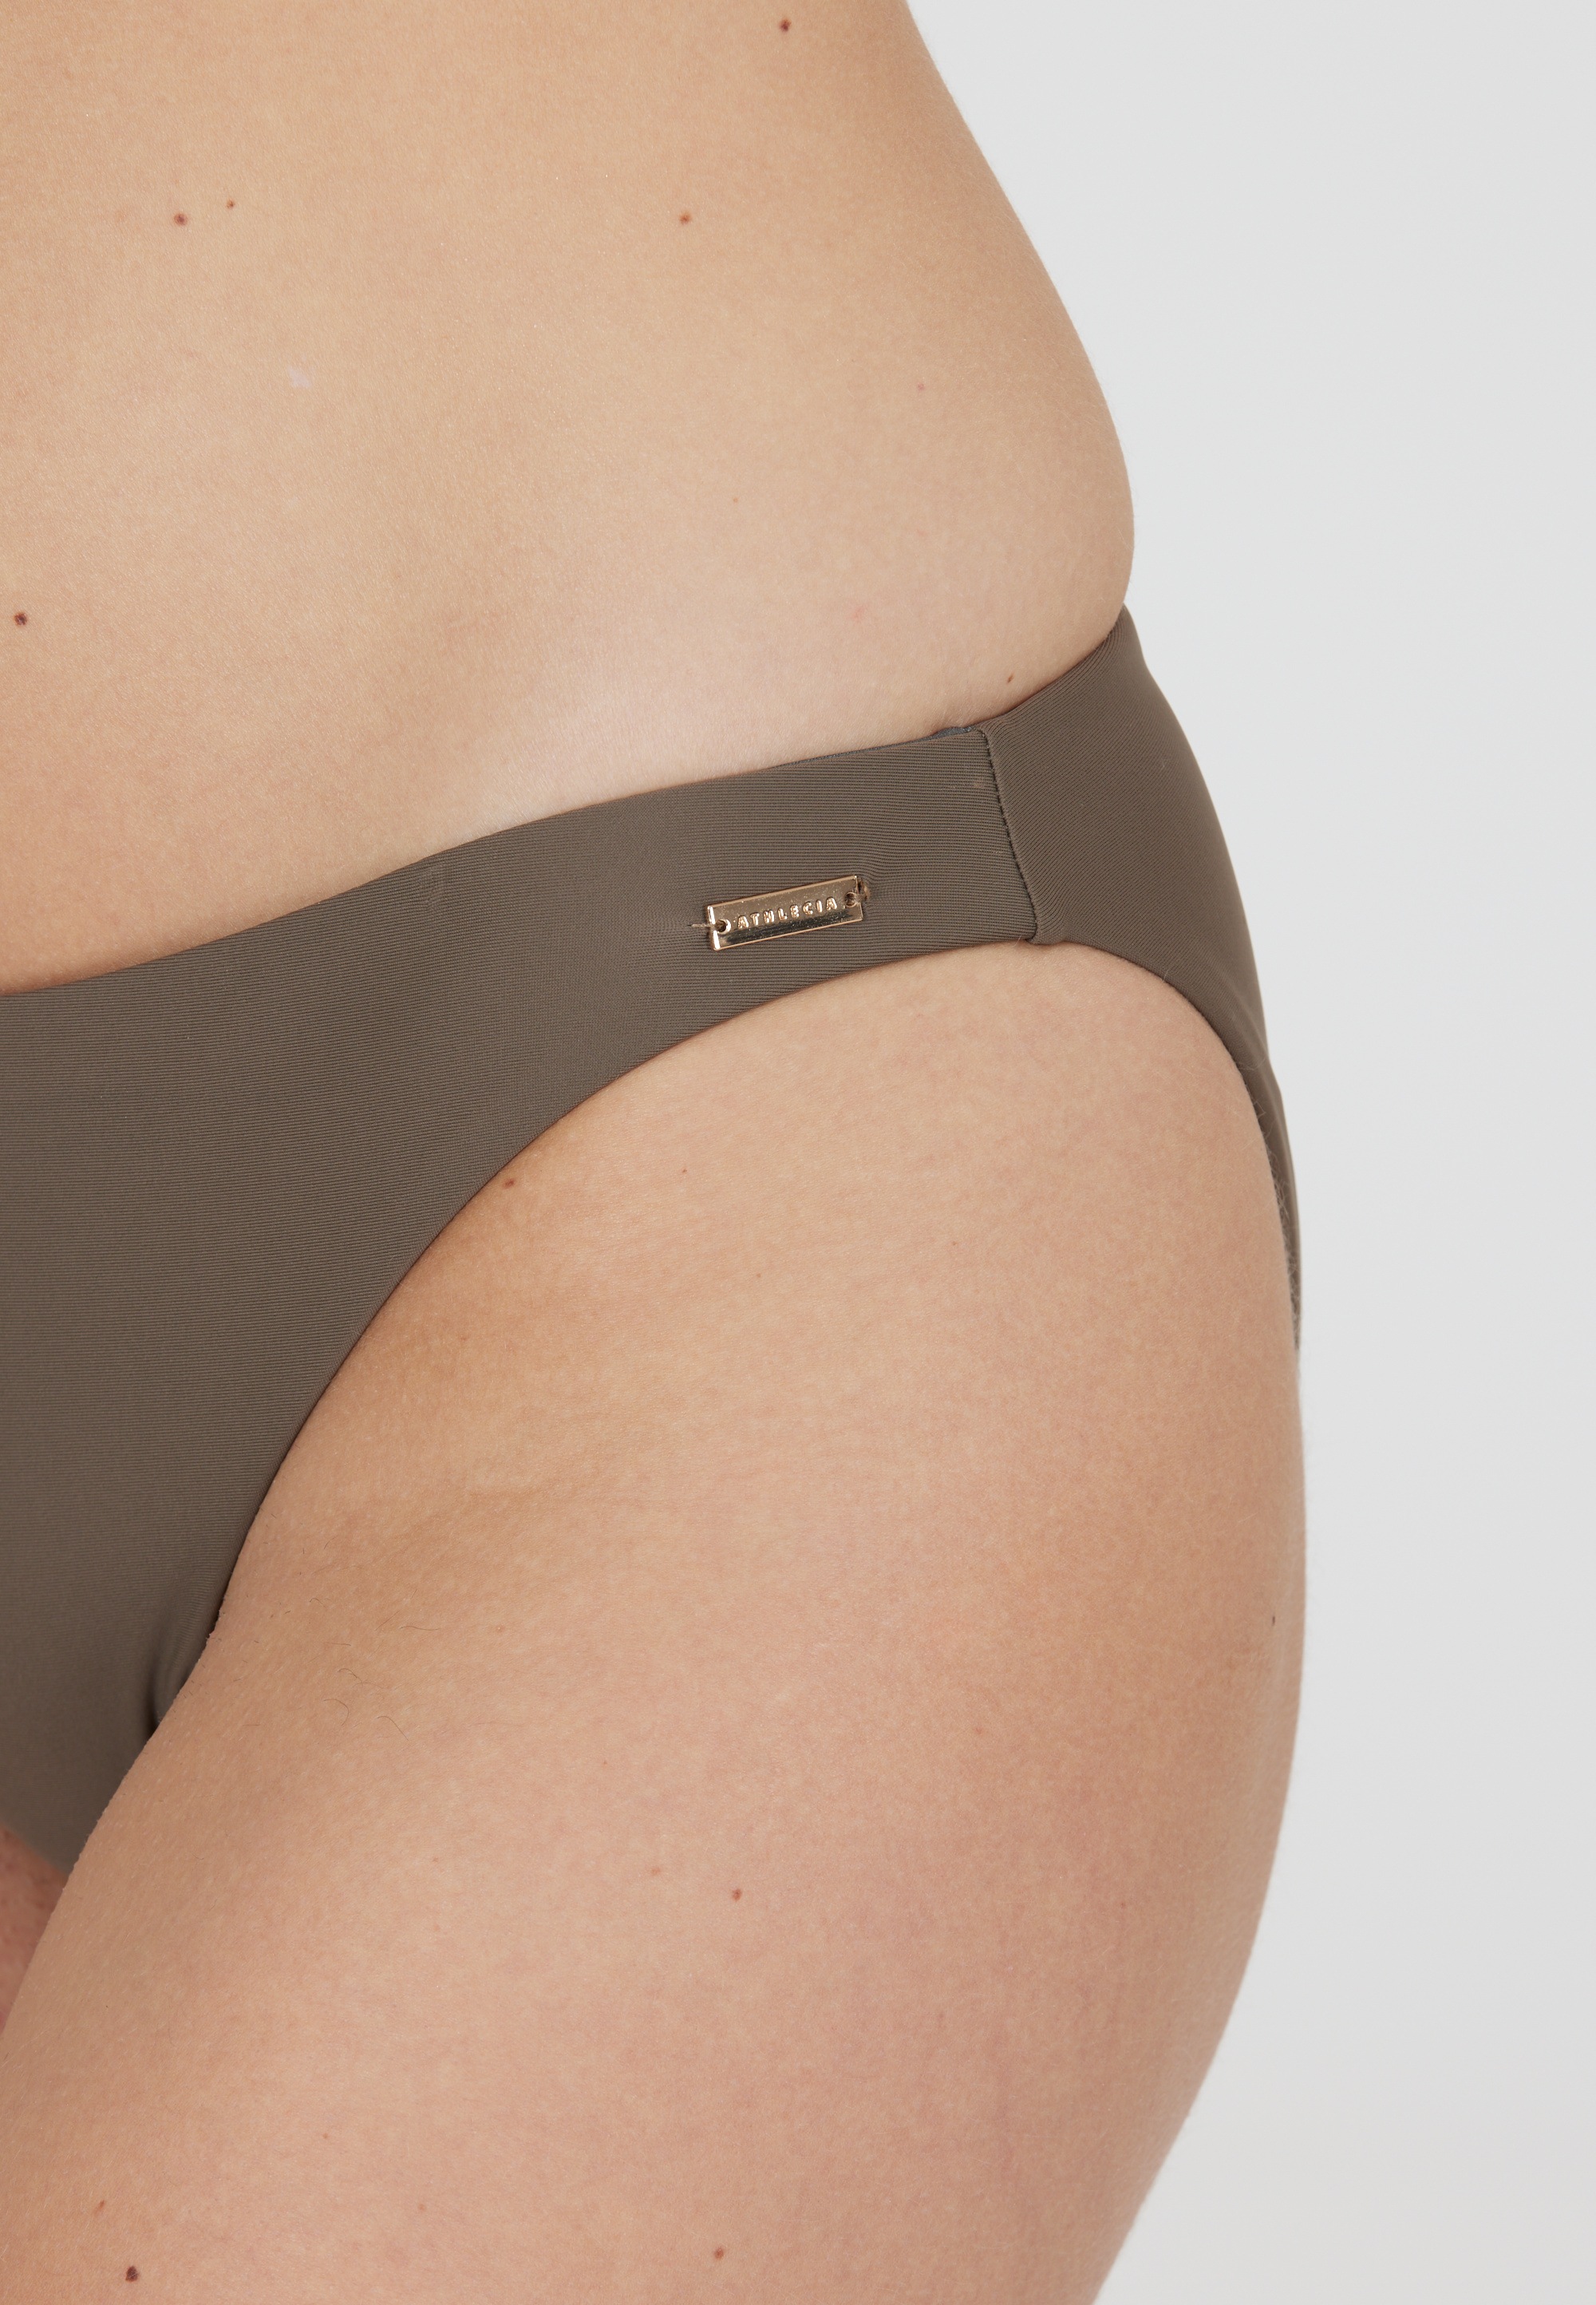 ATHLECIA Bikini-Hose »Aqumiee«, (1 St., Panty), mit innovativer Quick Dry-Technologie